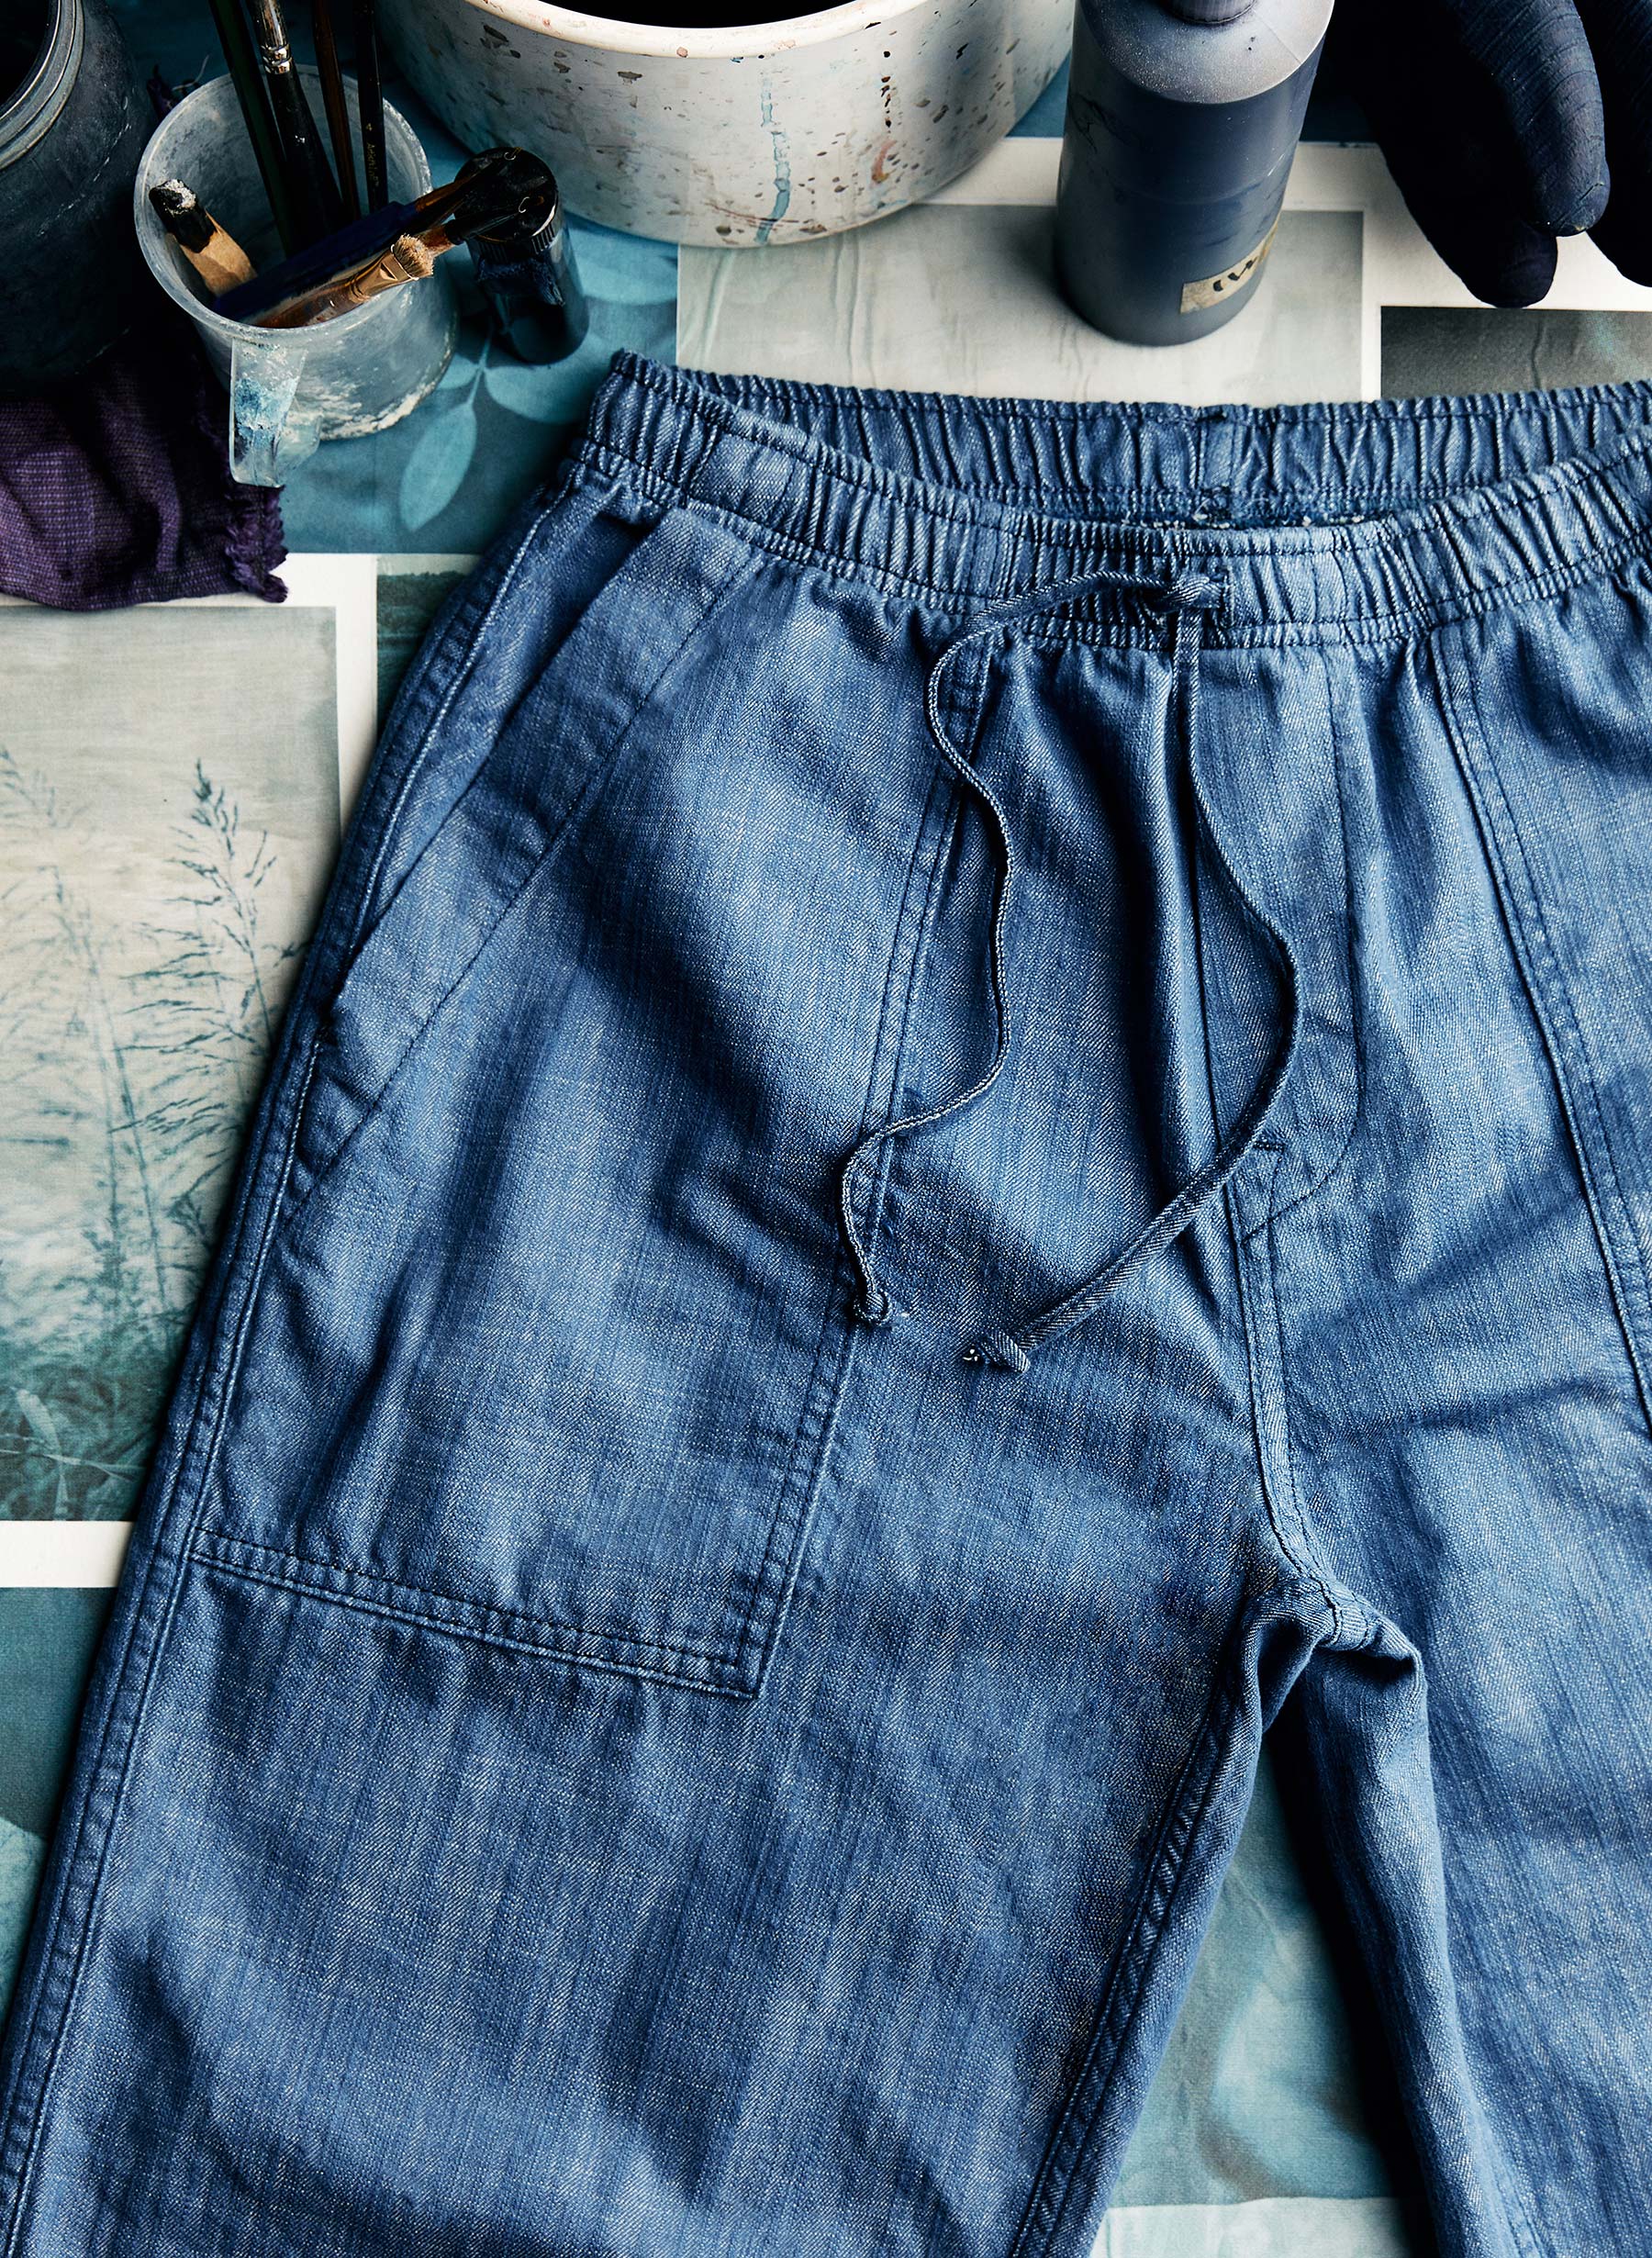 Jeans, White, Leg, Light, Product, Shorts, Azure, Black, Blue, Textile